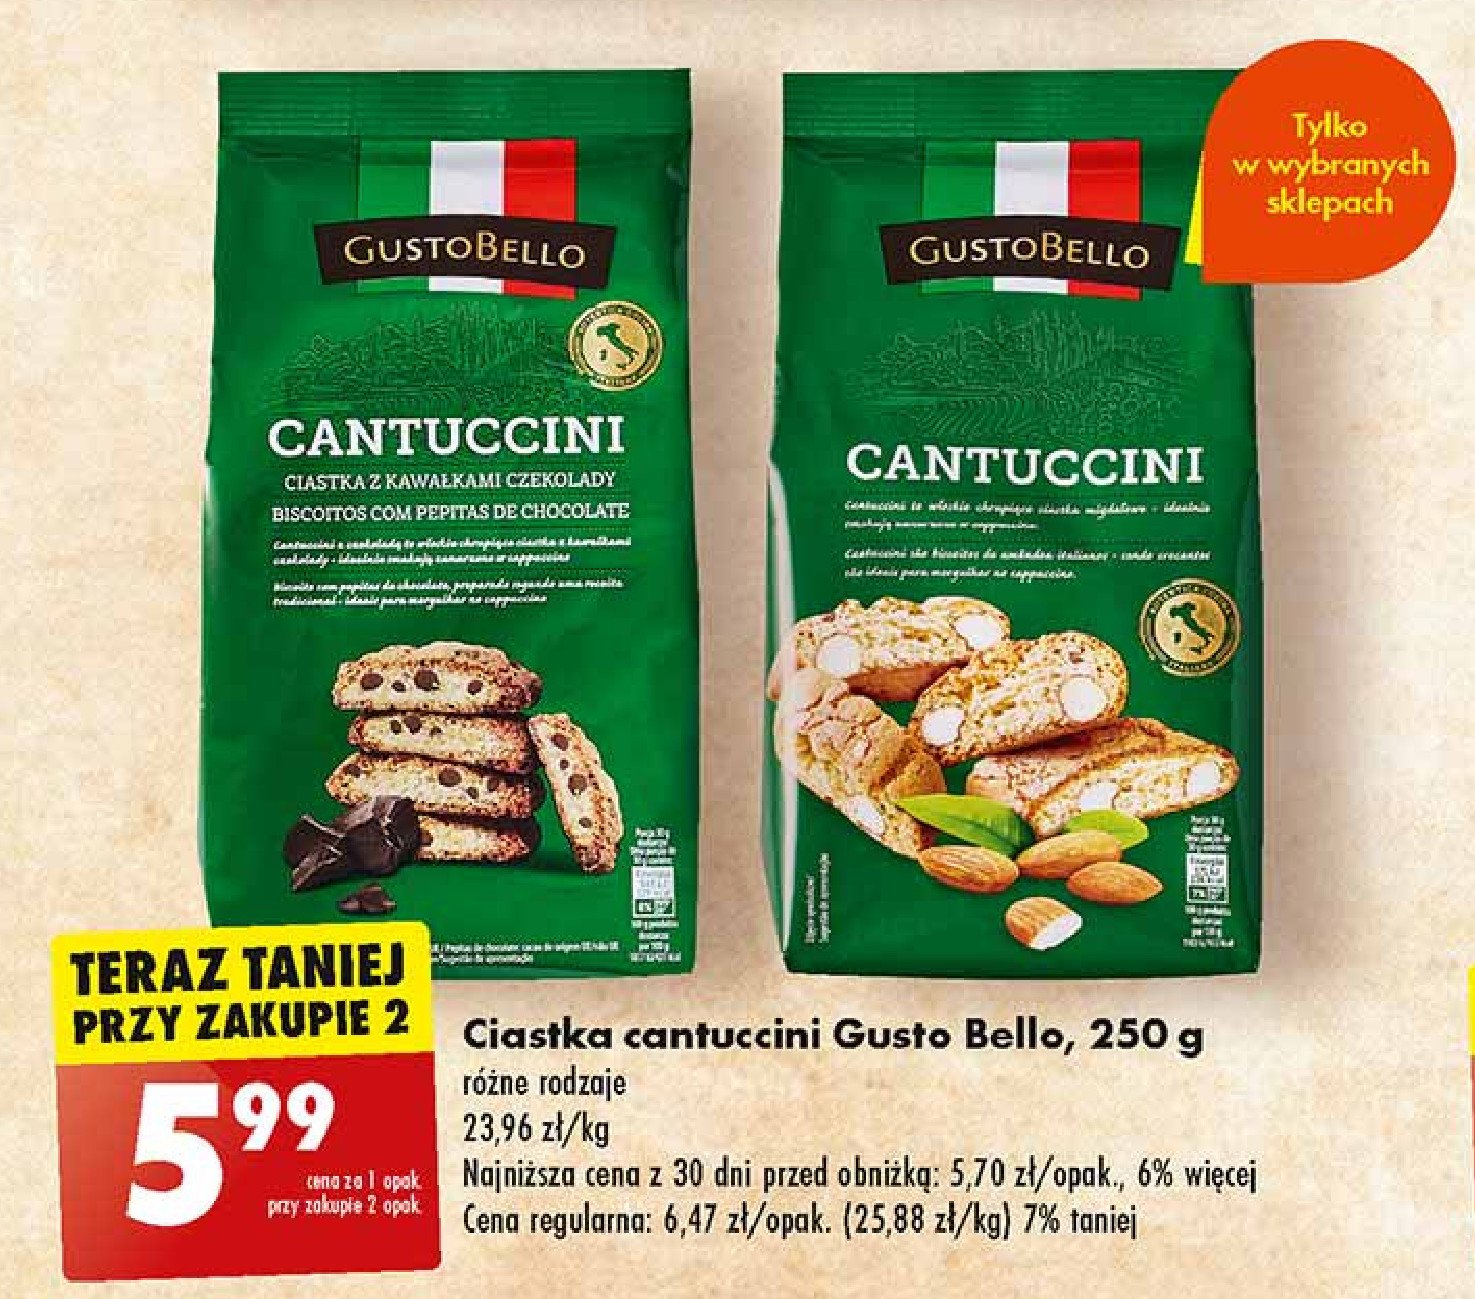 Ciastka cantuccini z migdałami Gustobello promocja